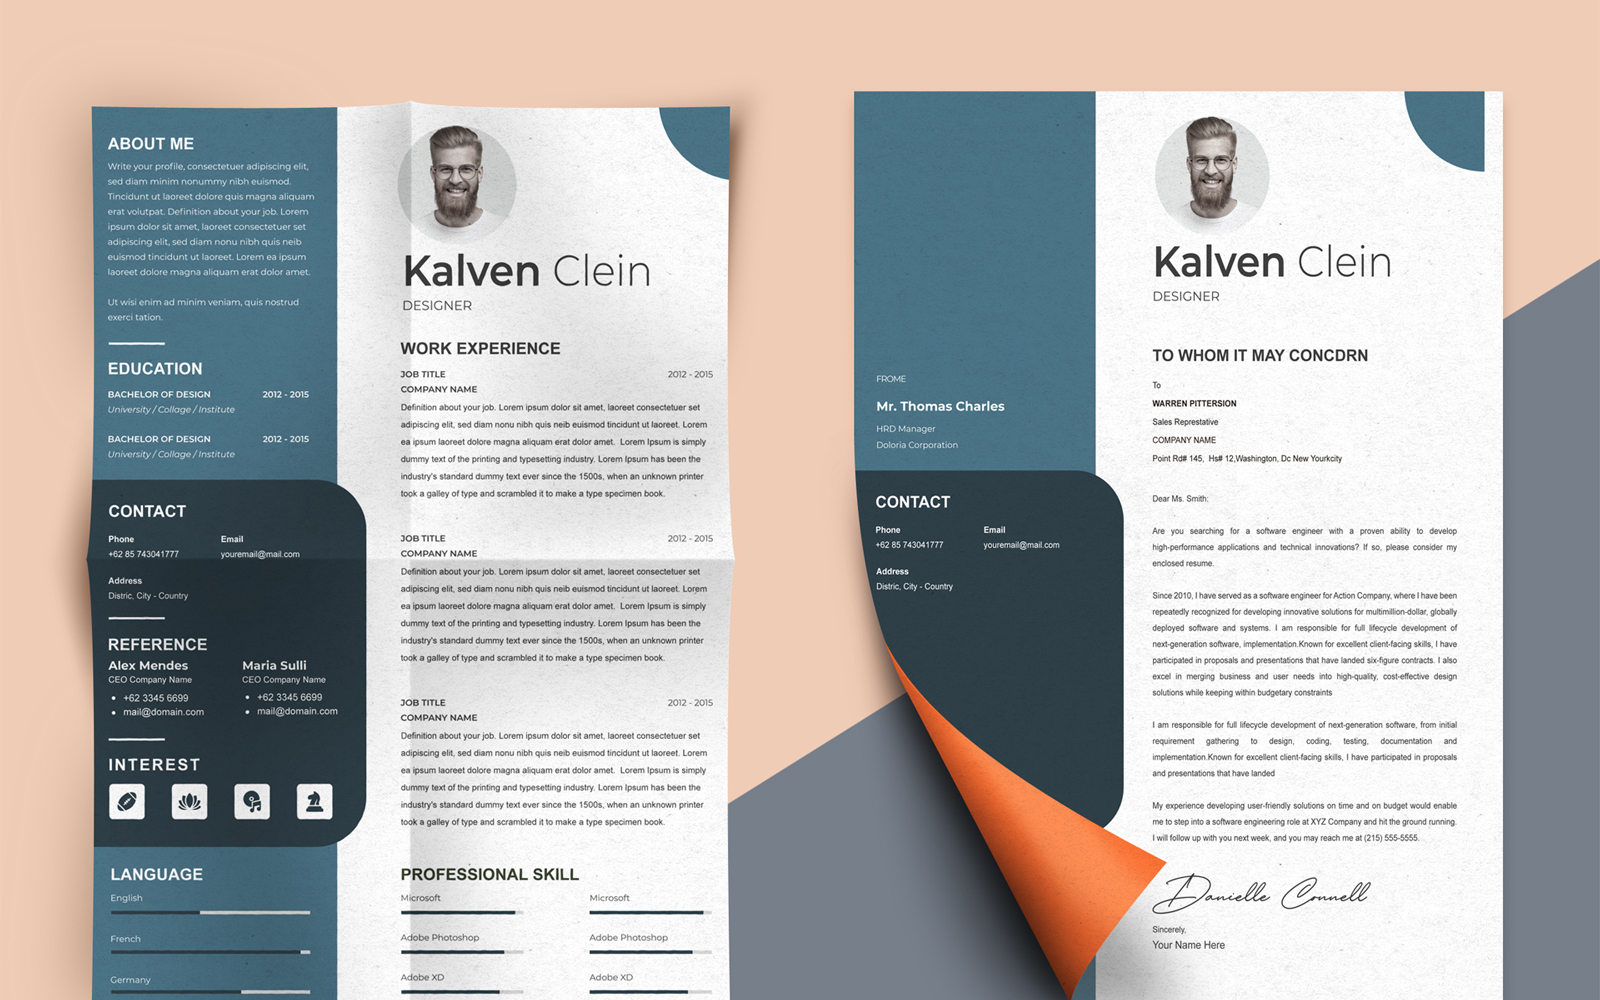 Kalven Clein - Web Designer Resume Templates